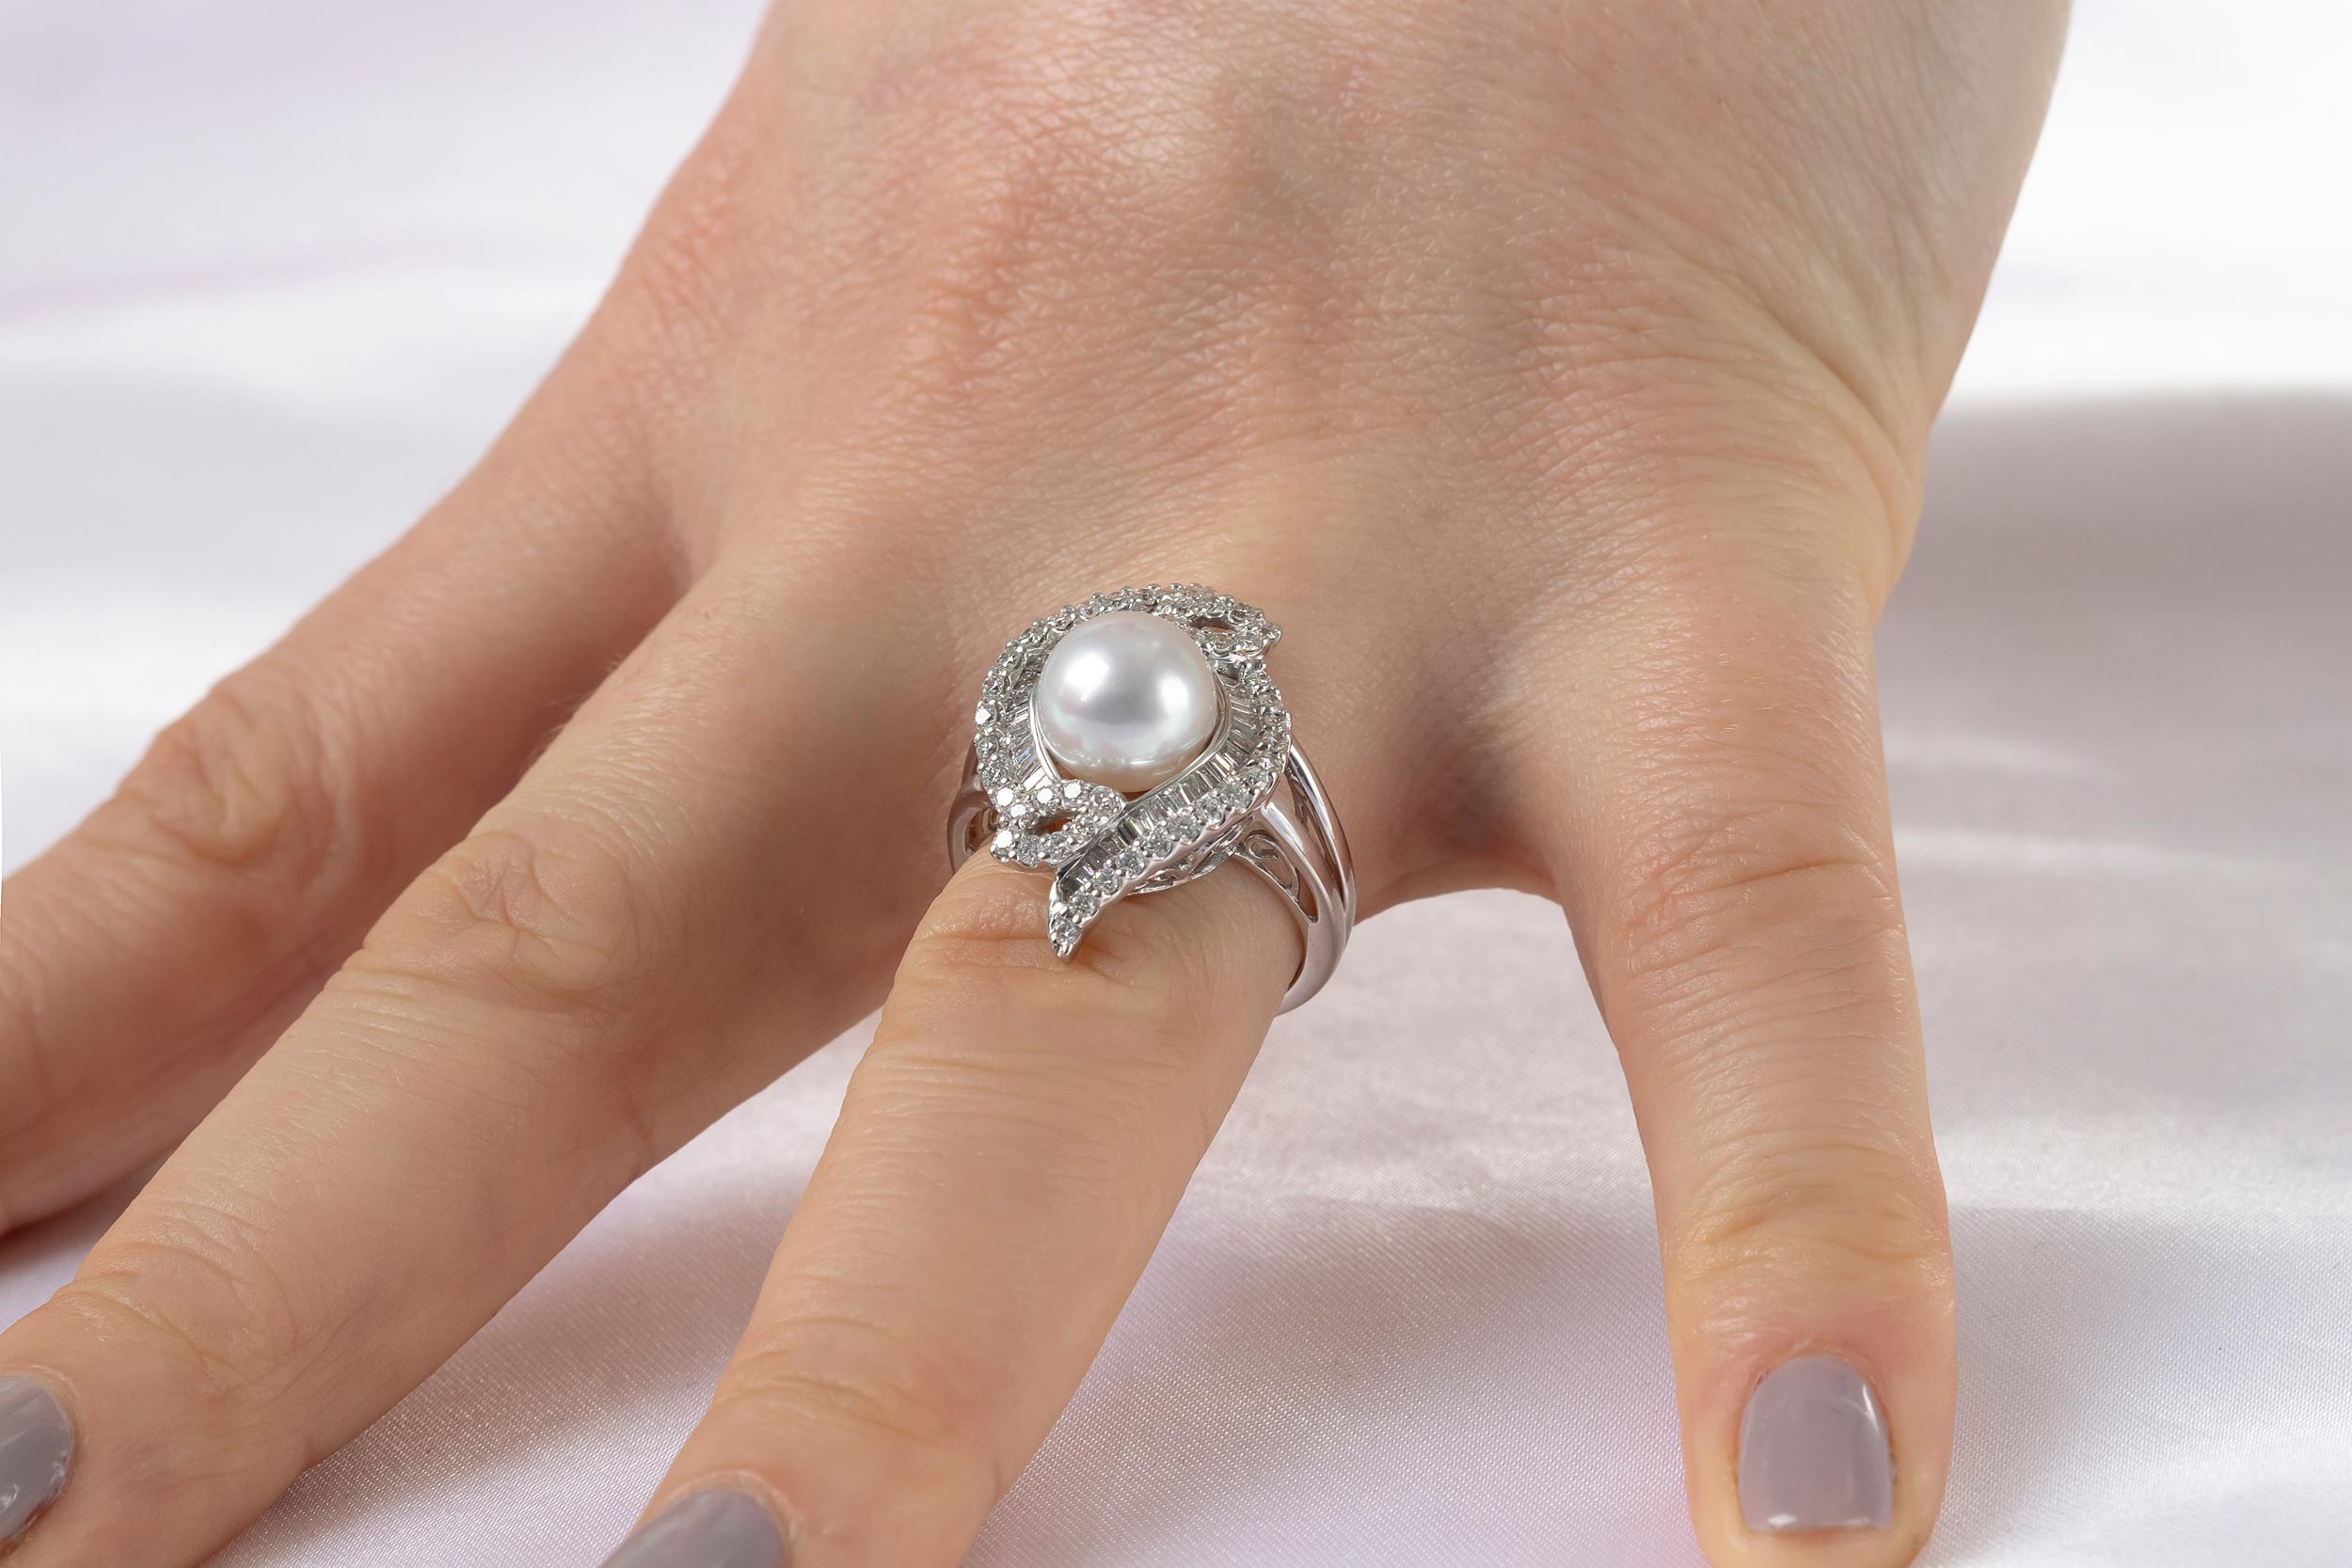 Women's Yoko London South Sea Pearl and Diamond Ring in 18 Karat White Gold For Sale